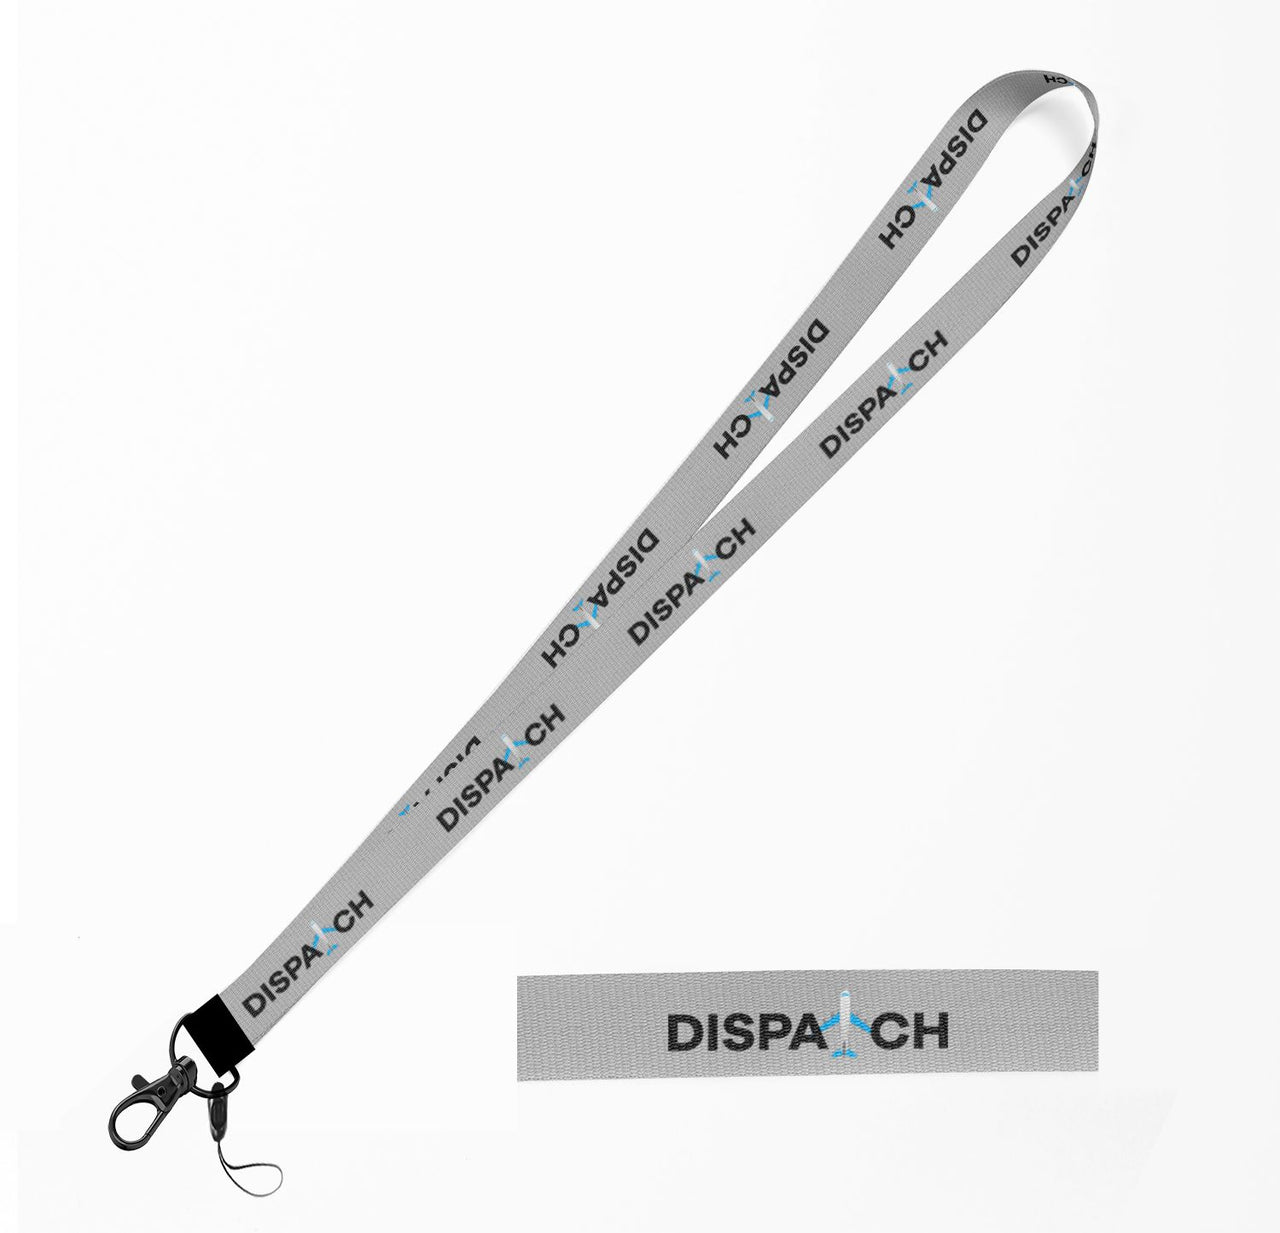 Dispatch Designed Lanyard & ID Holders